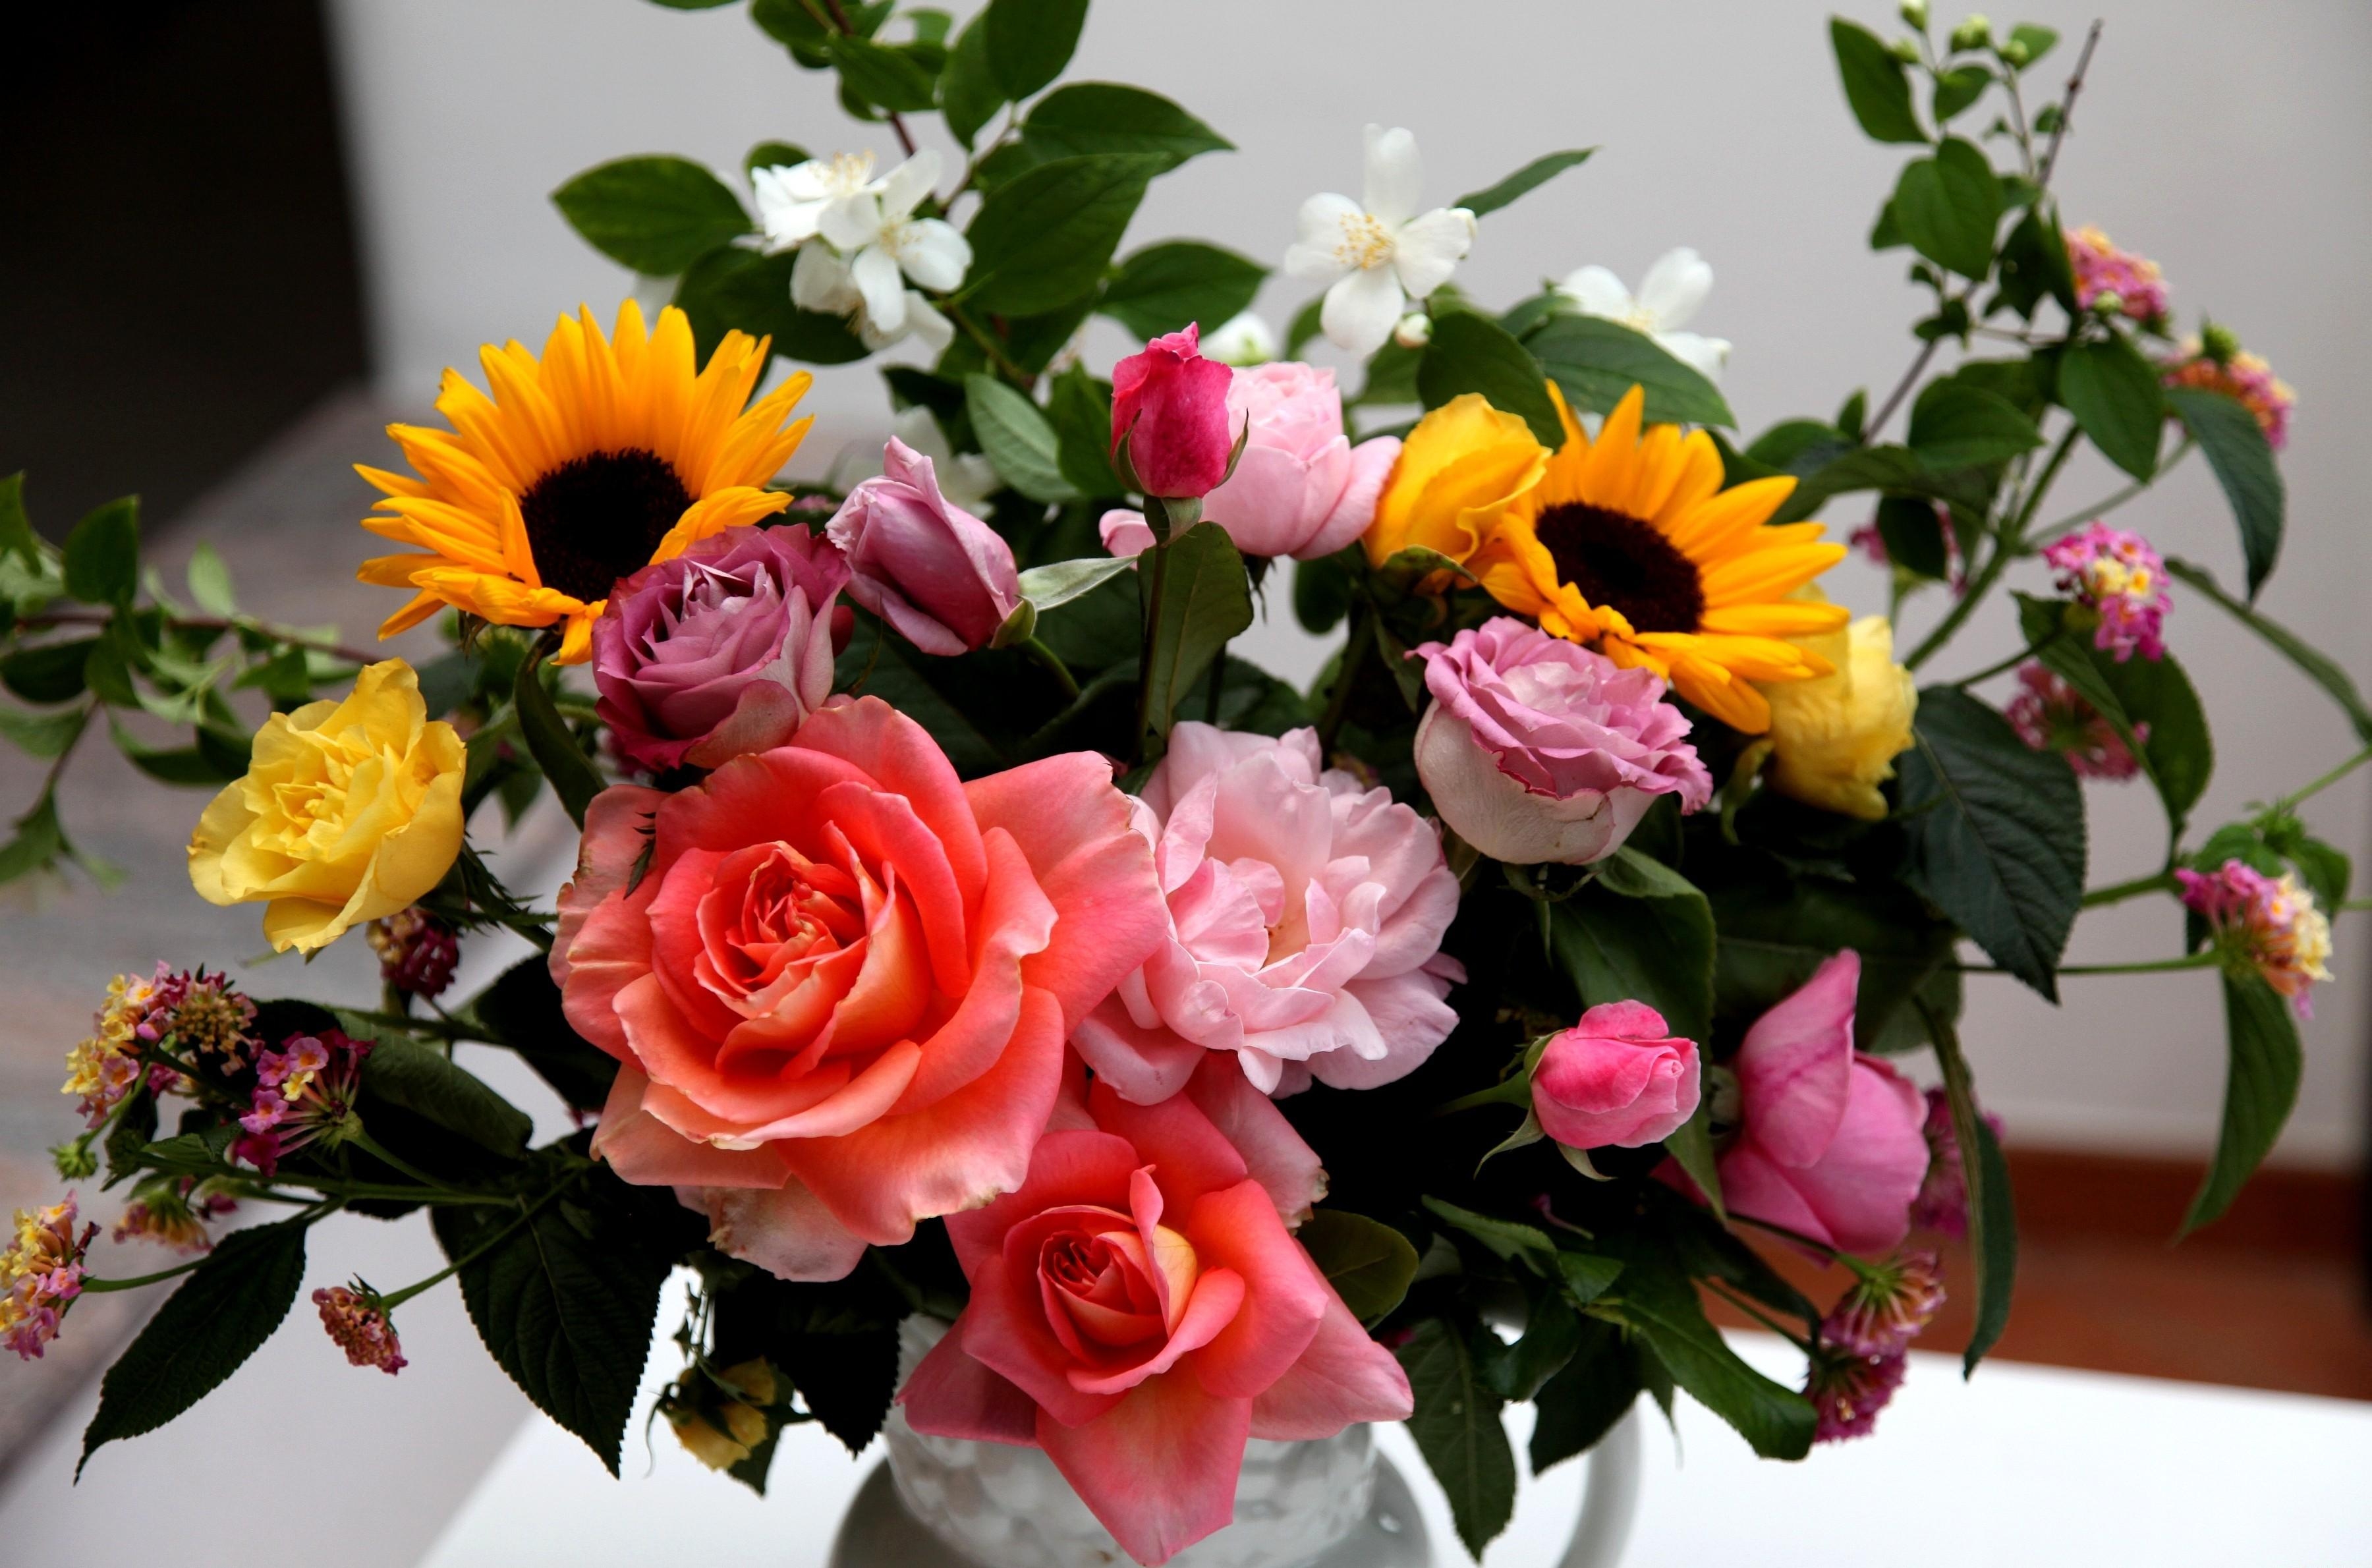 sunflowers, flowers, roses, bouquet, vase, composition, jasmine